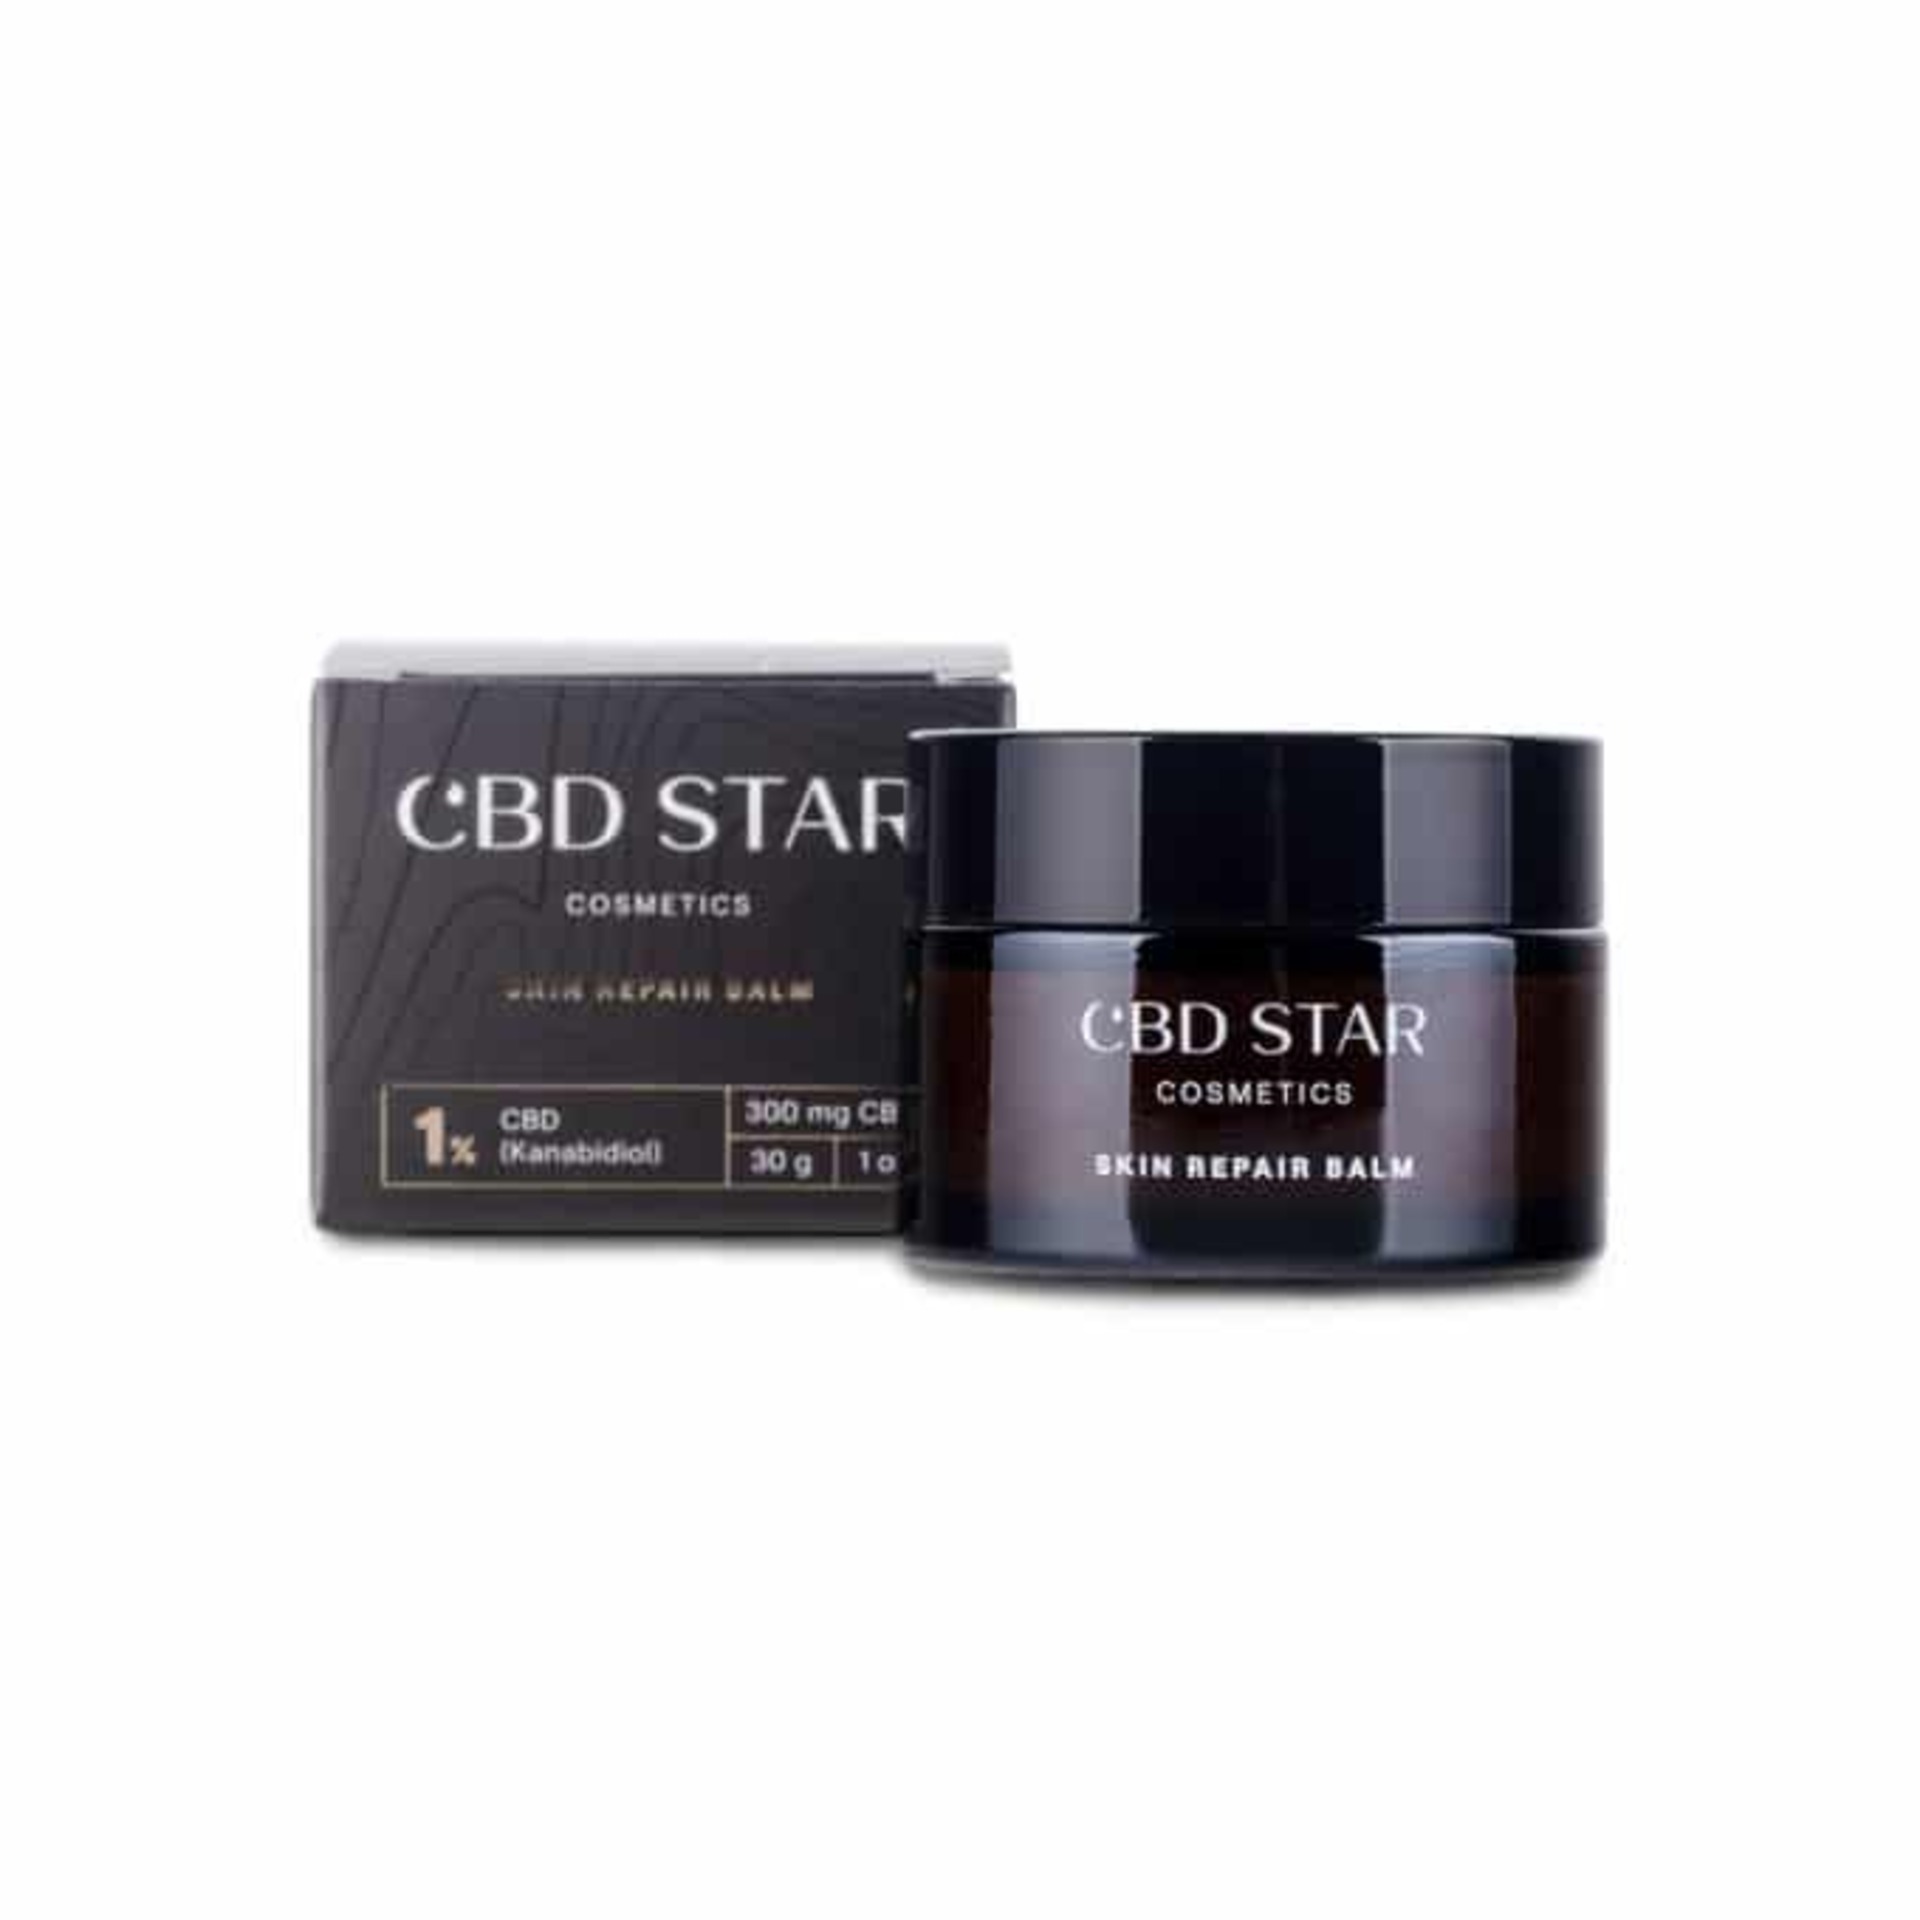 CBD STAR Skin repair balm 1% CBD 30 g expirace